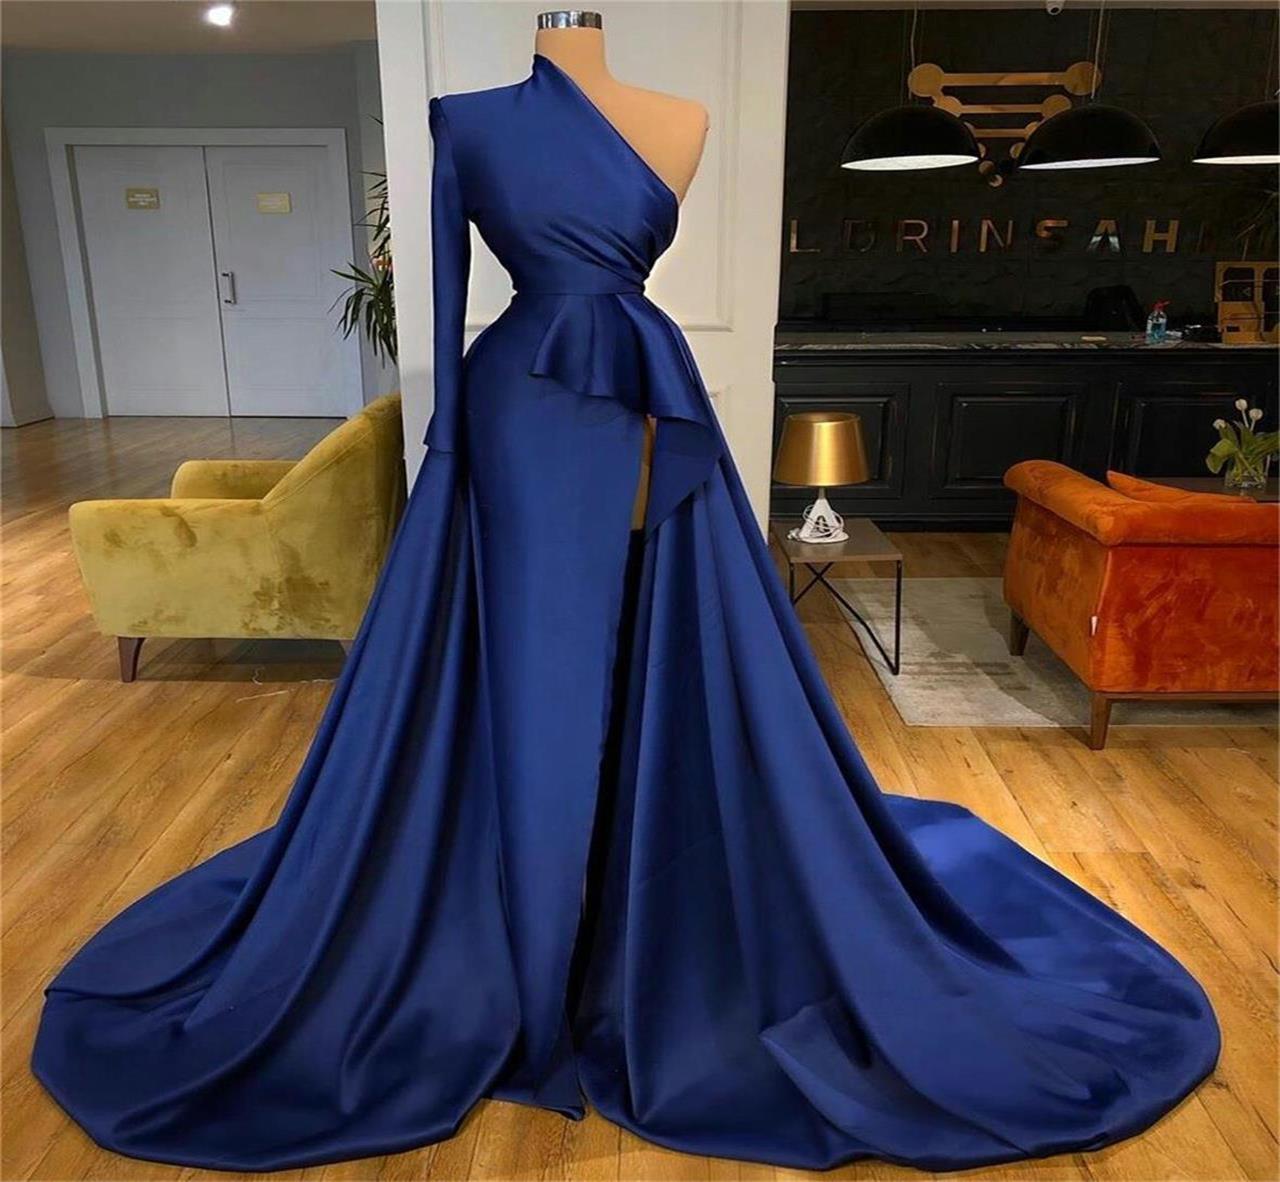 Royal Blue Prom Dresses, Detachable Skirt Prom Dress, Satin Prom Dress, Elegant Prom Dresses, Vintage Prom Dresses, Prom Gown, Robe De Soiree,